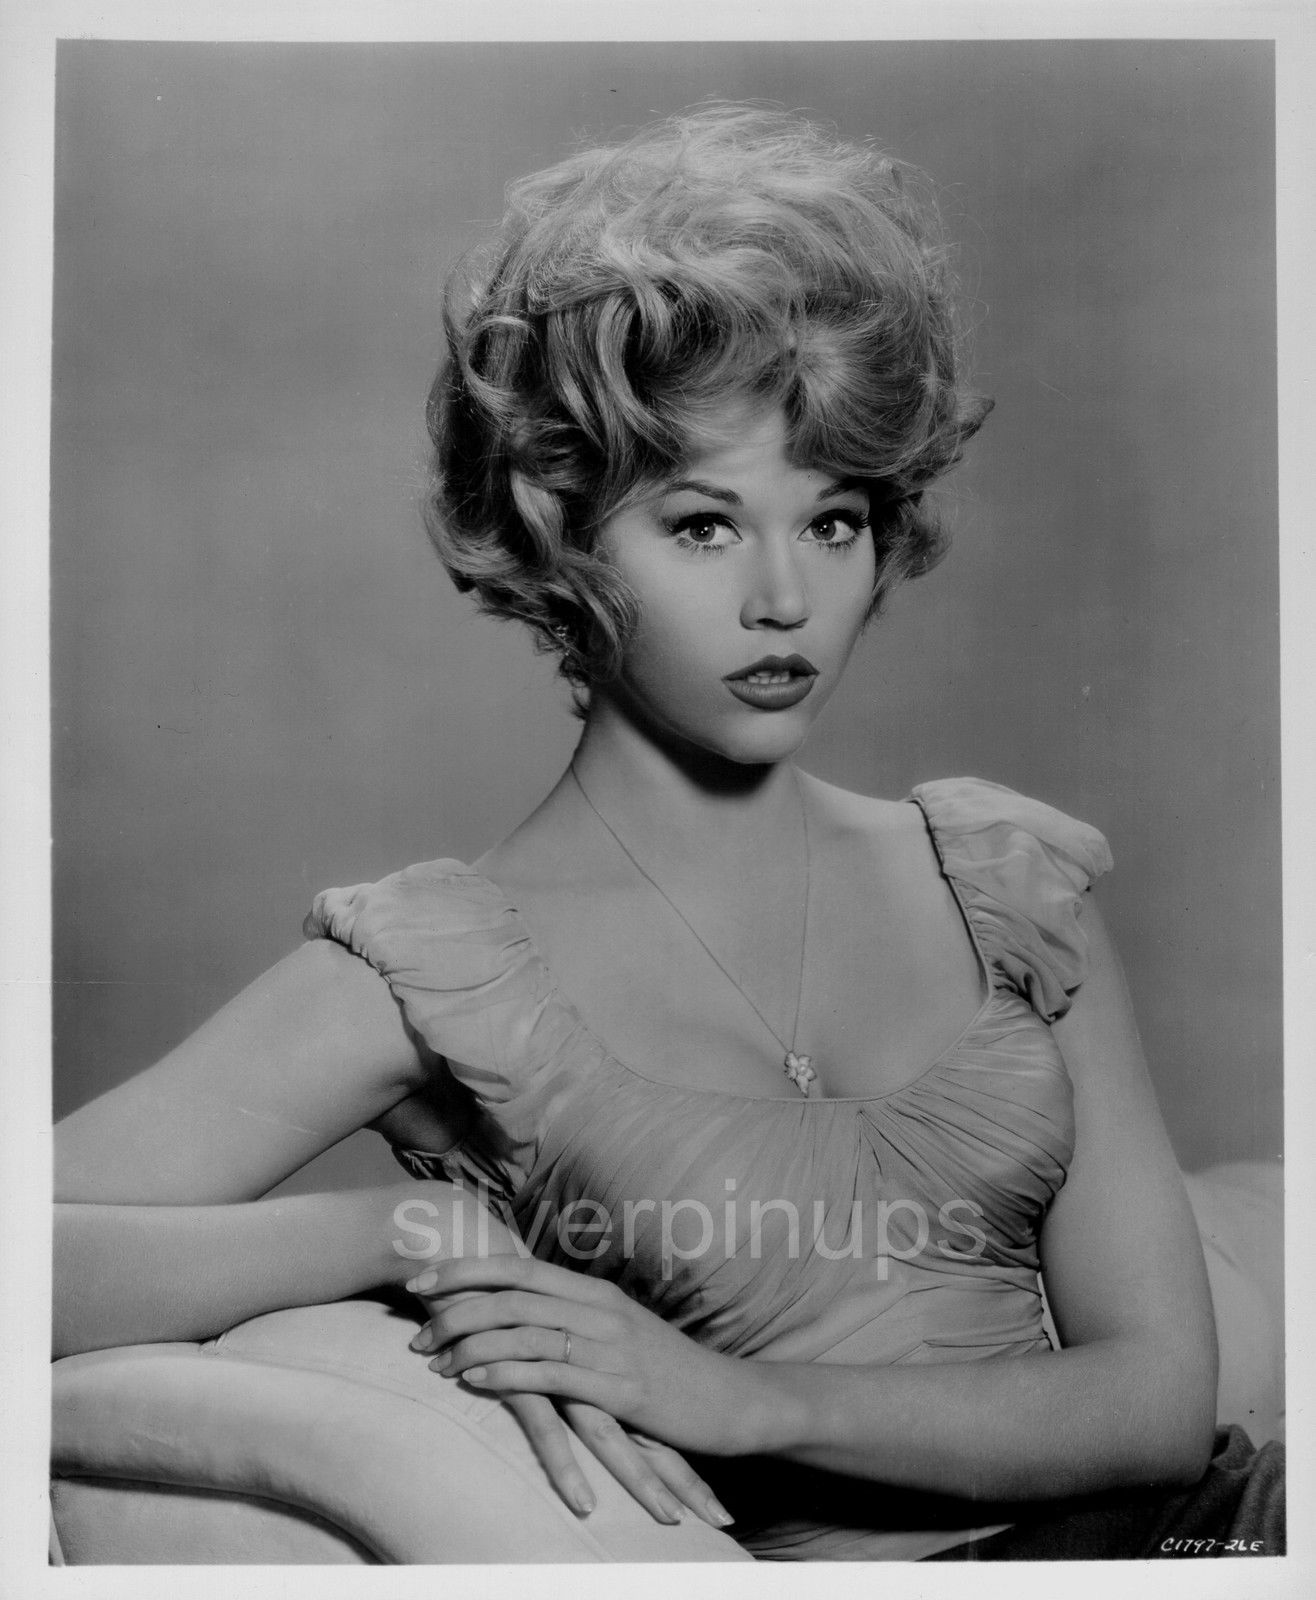 Jane Fonda Hottie